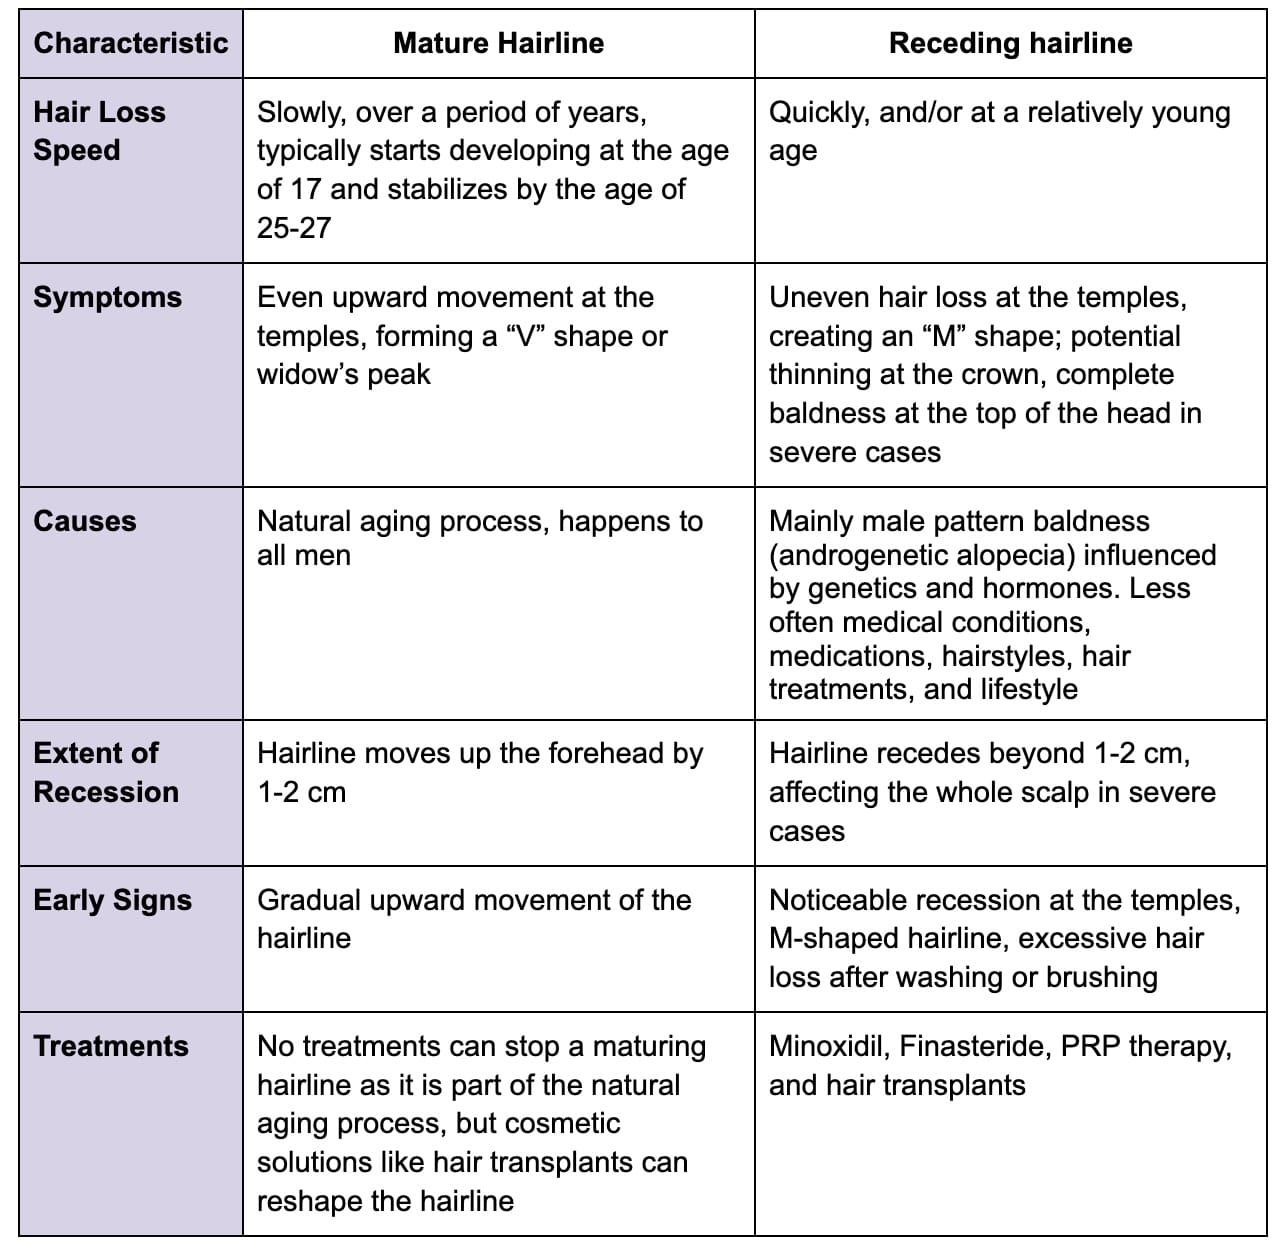 Receding vs mature hairline comparison table